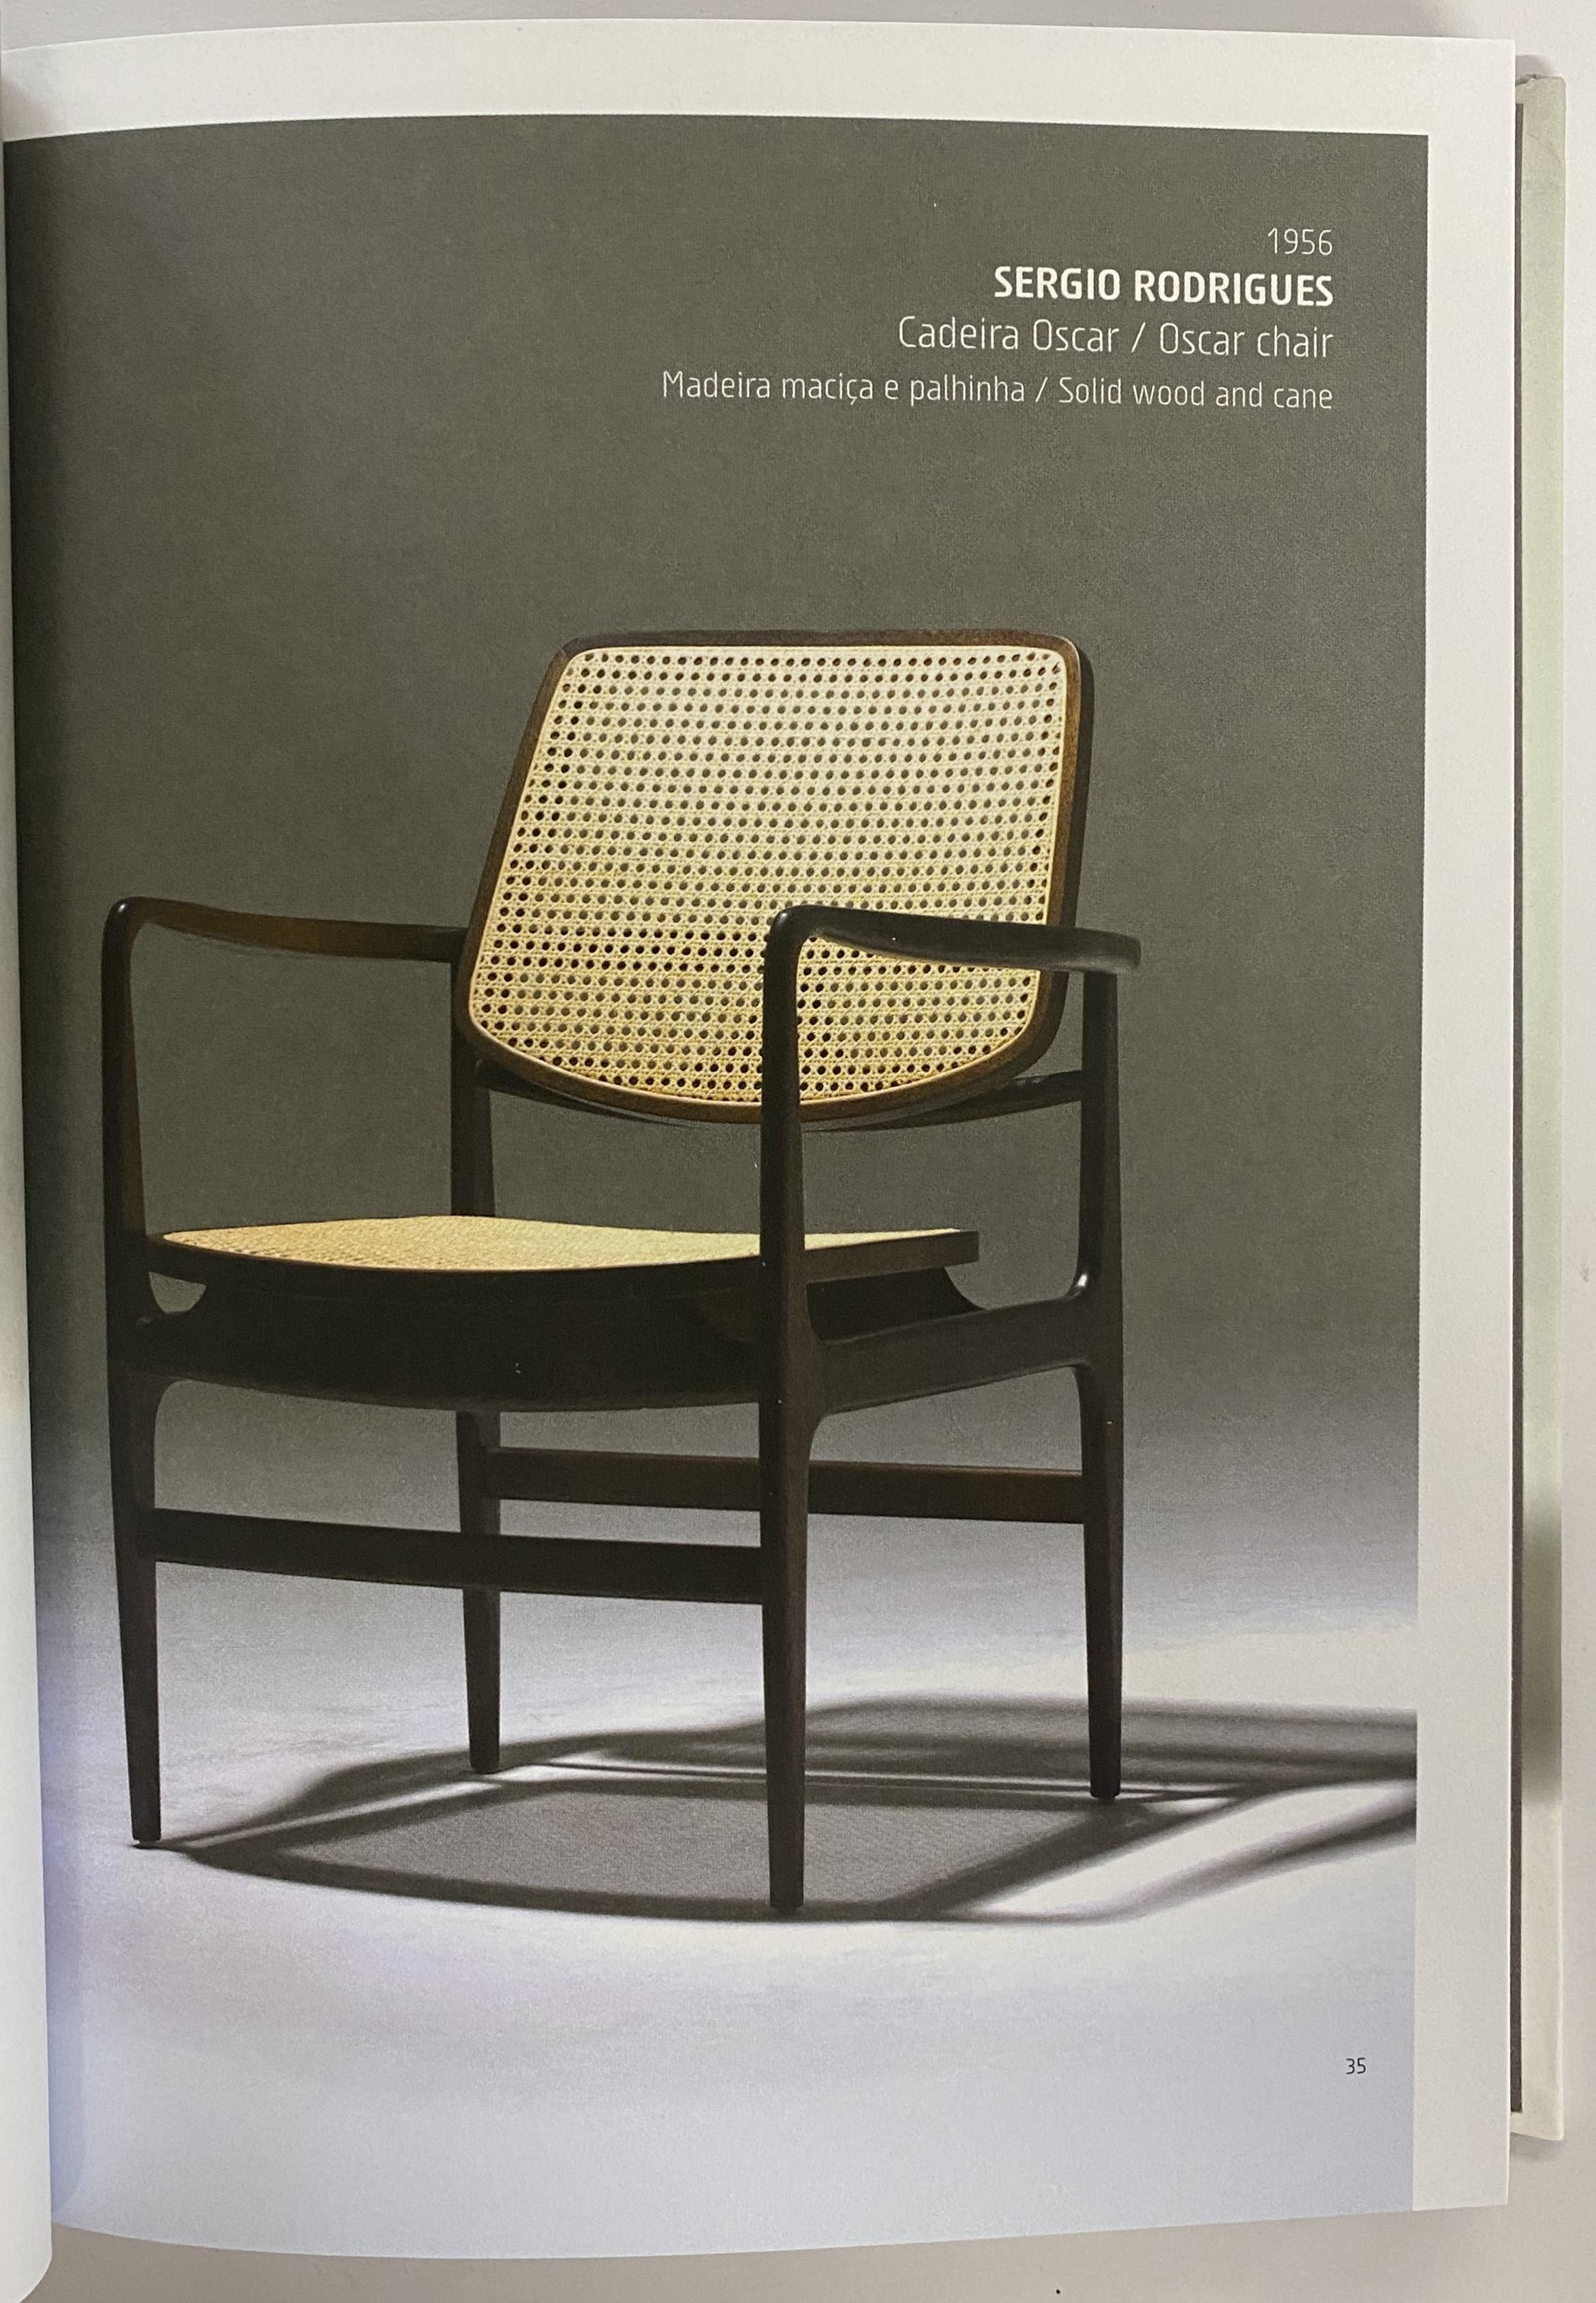 Paper Brazilian Furniture Design editor Otavio Nazareth (Book) For Sale